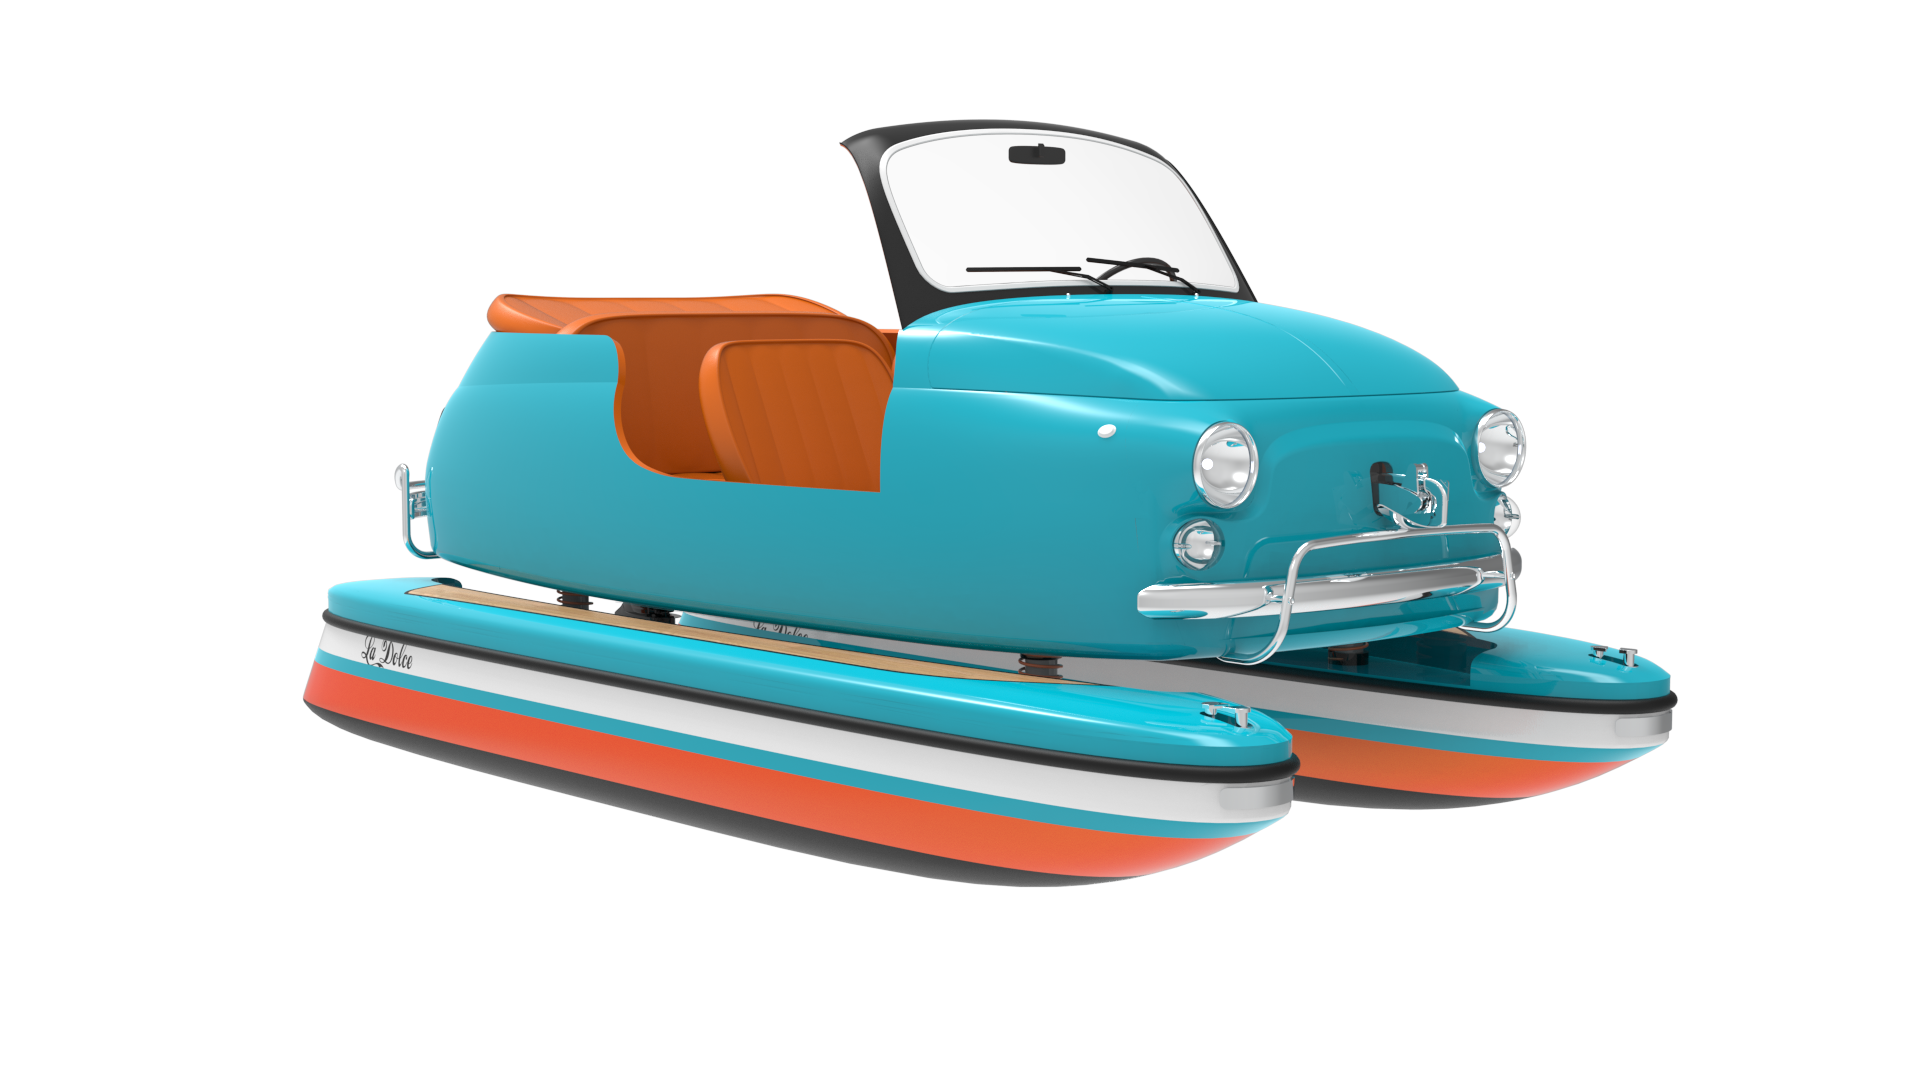 The La Dolce Floating Motors Concept